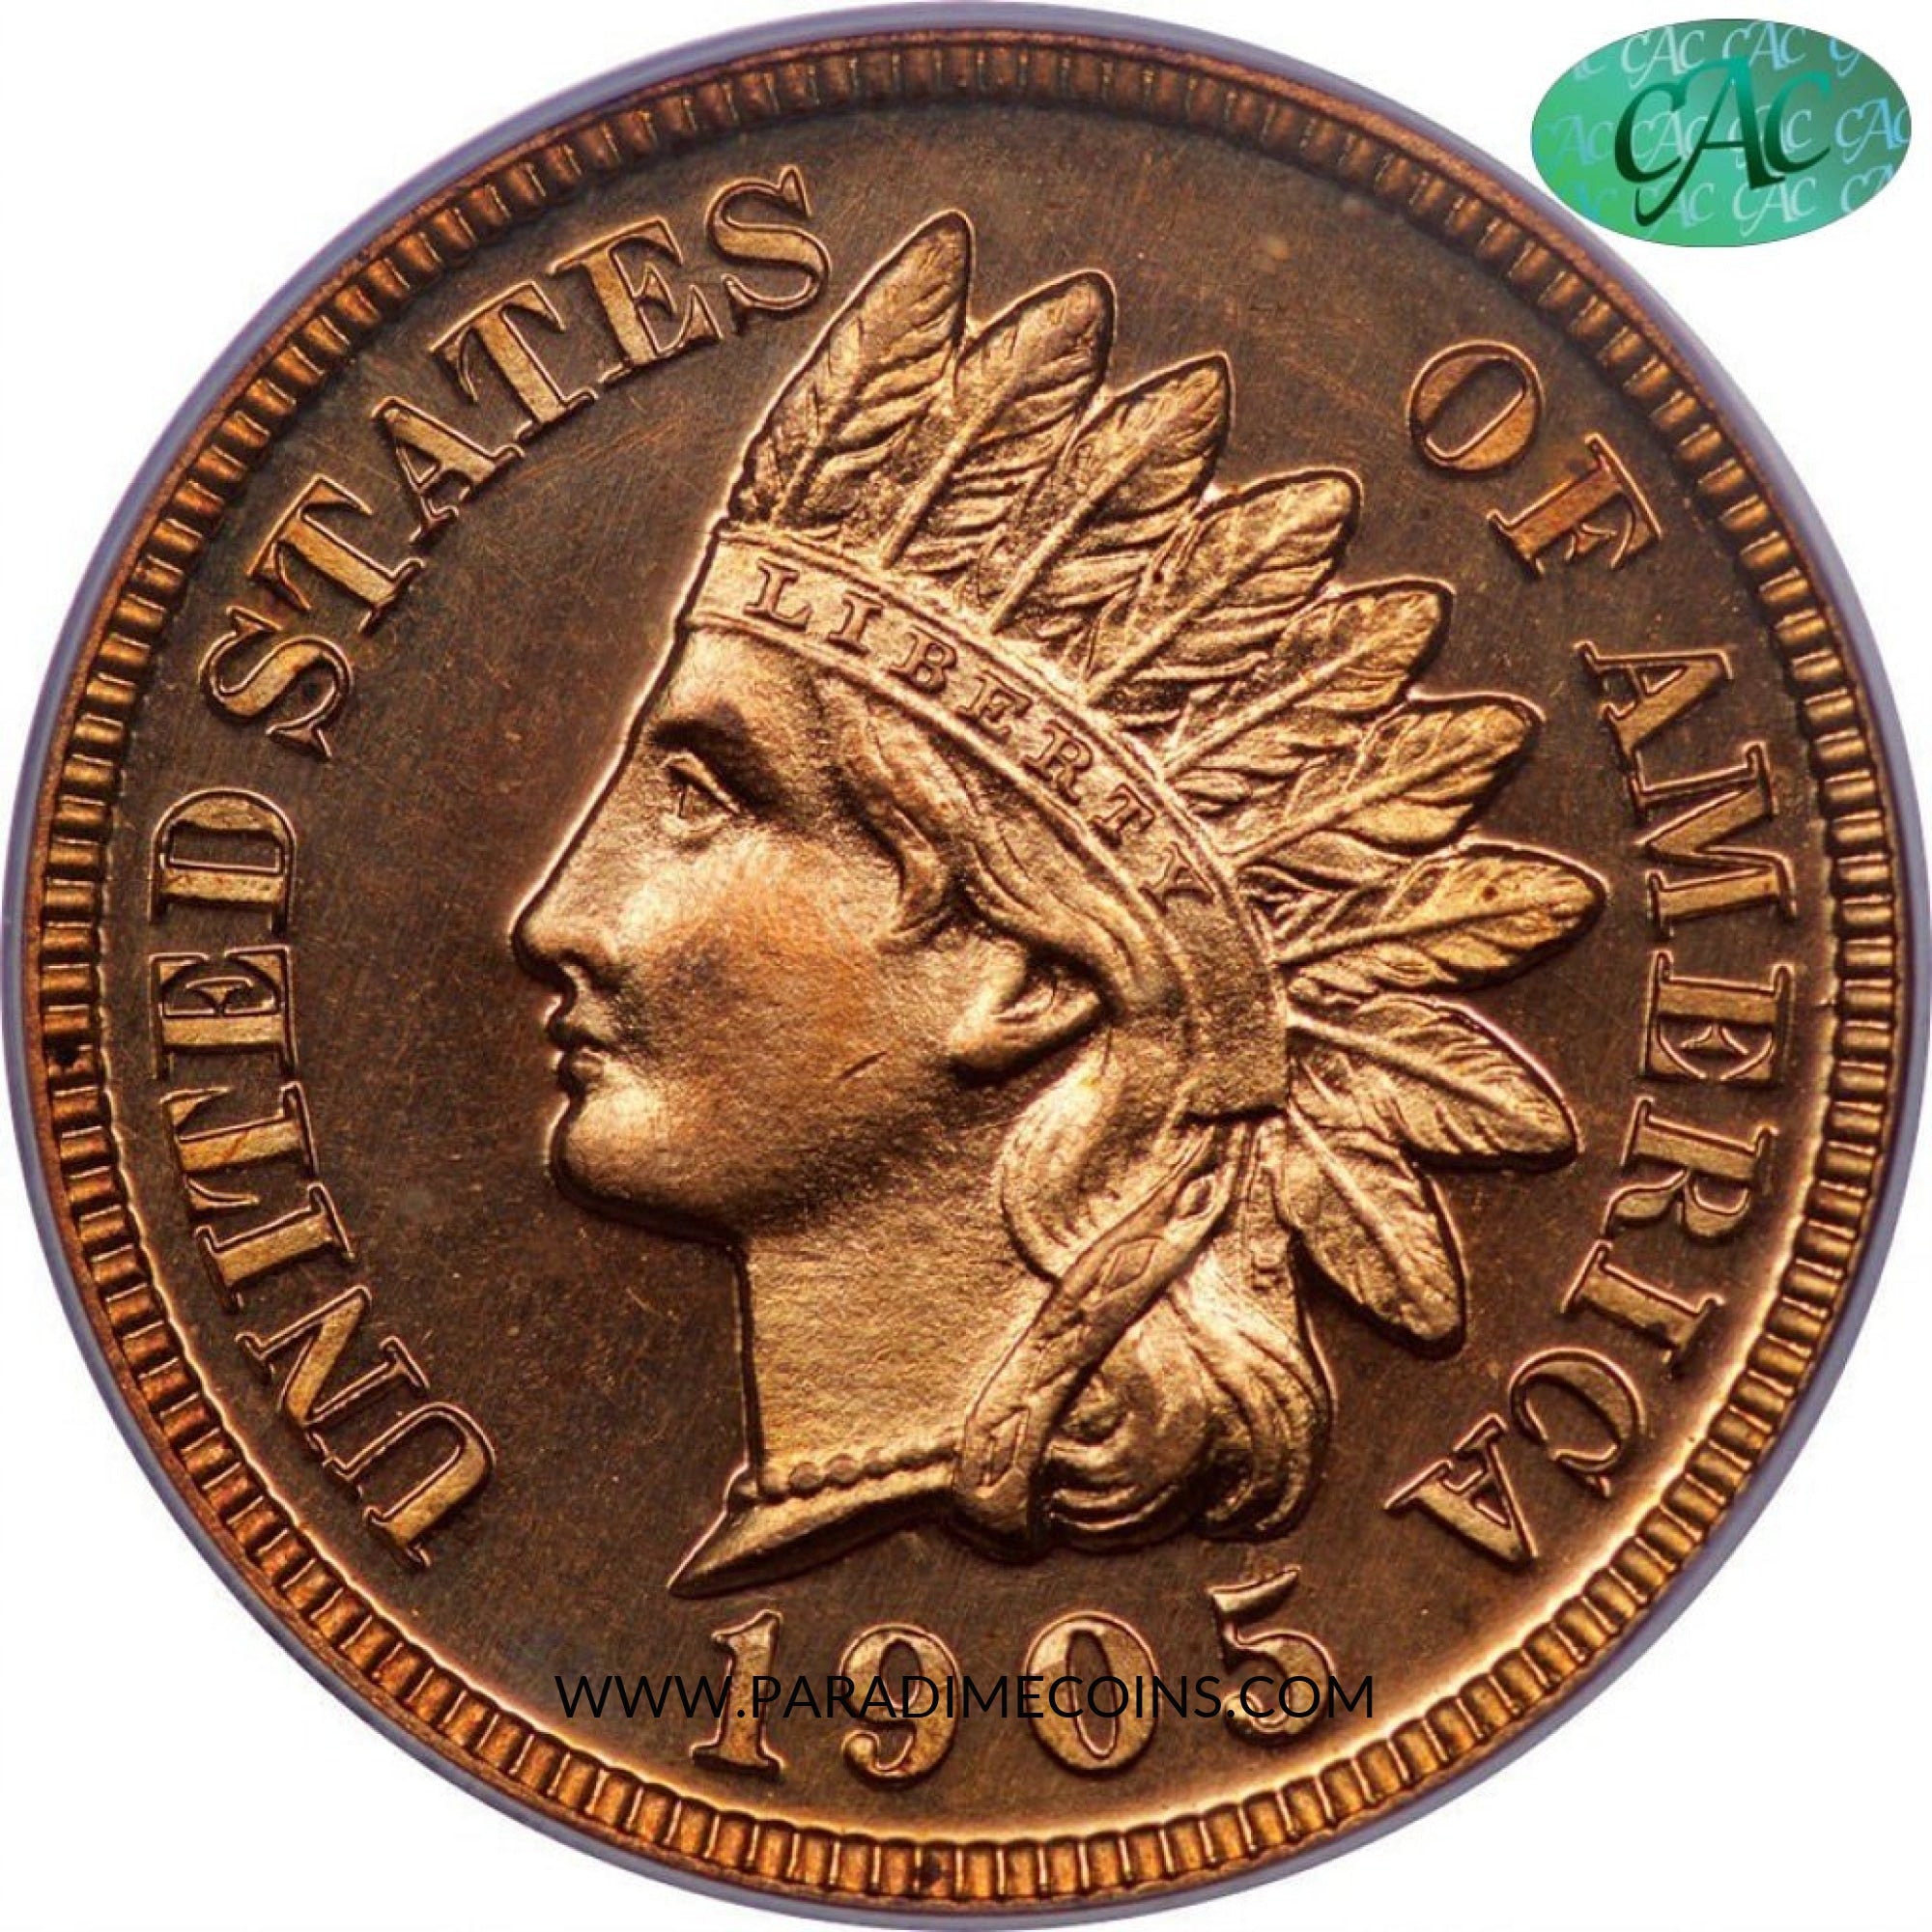 1905 1C PR66 RD CAMEO PCGS CAC EEPS - Paradime Coins | PCGS NGC CACG CAC Rare US Numismatic Coins For Sale